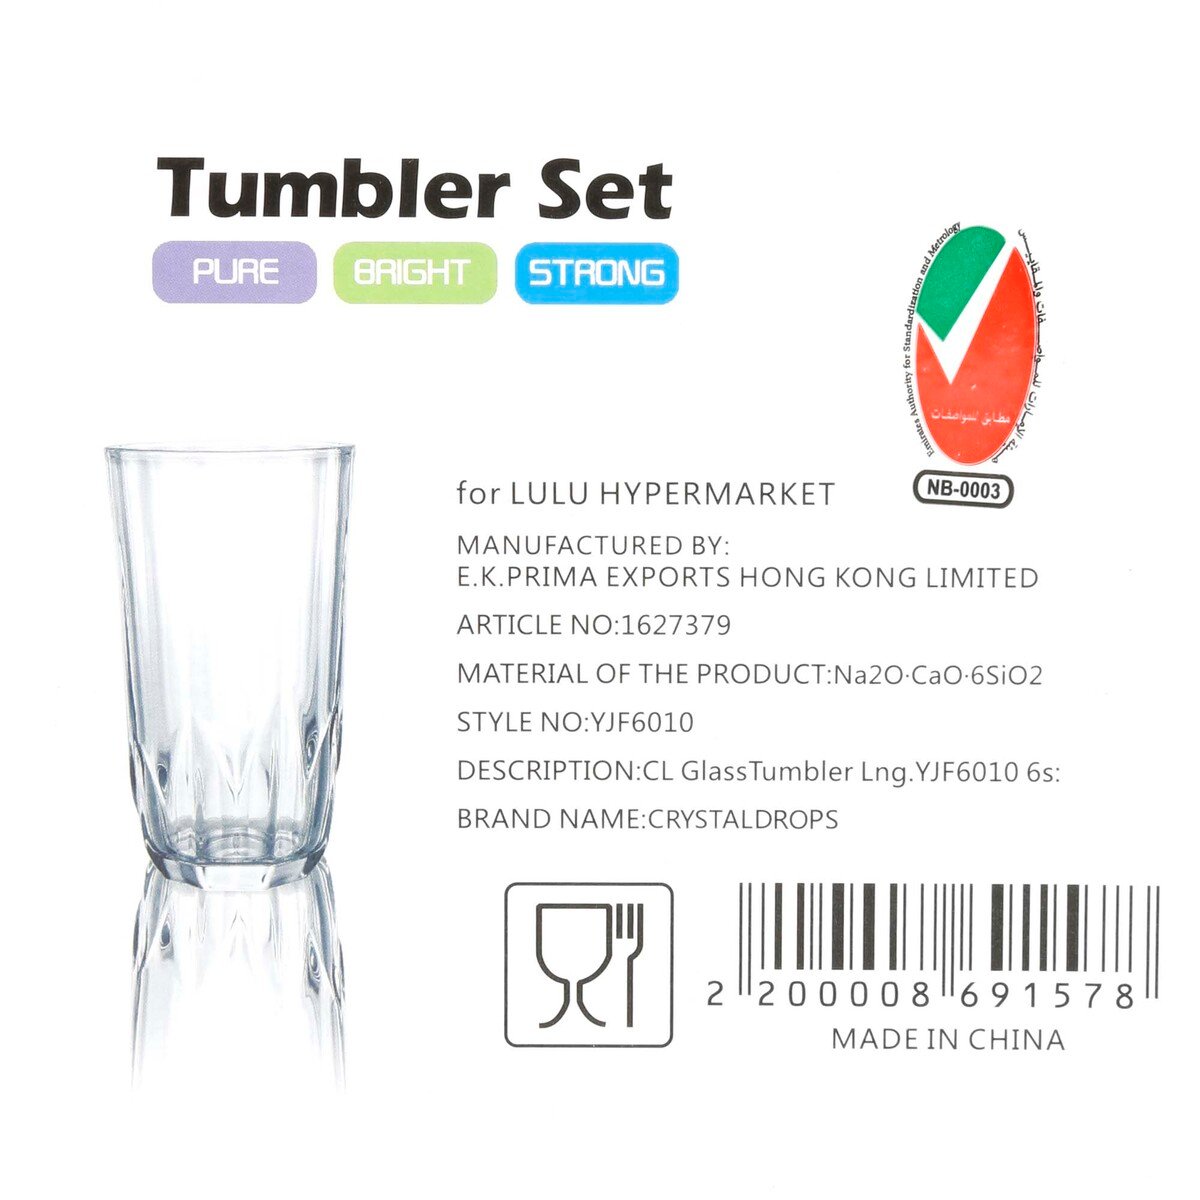 Crystal Drops Glass Tumbler Long YJF6010 6pcs